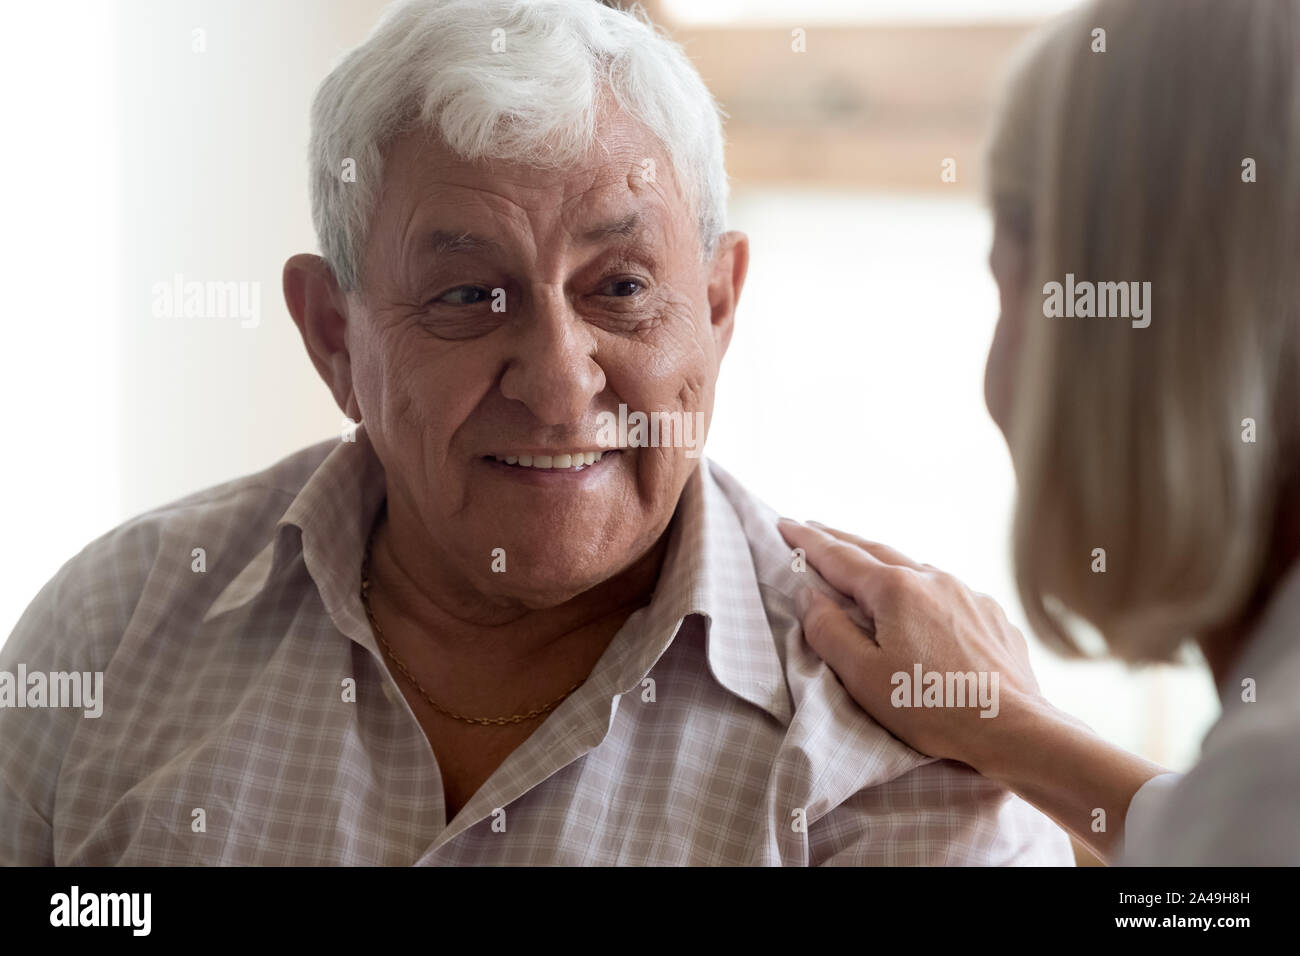 Close up view focus on elderly patient communicates with nurse Stock Photo